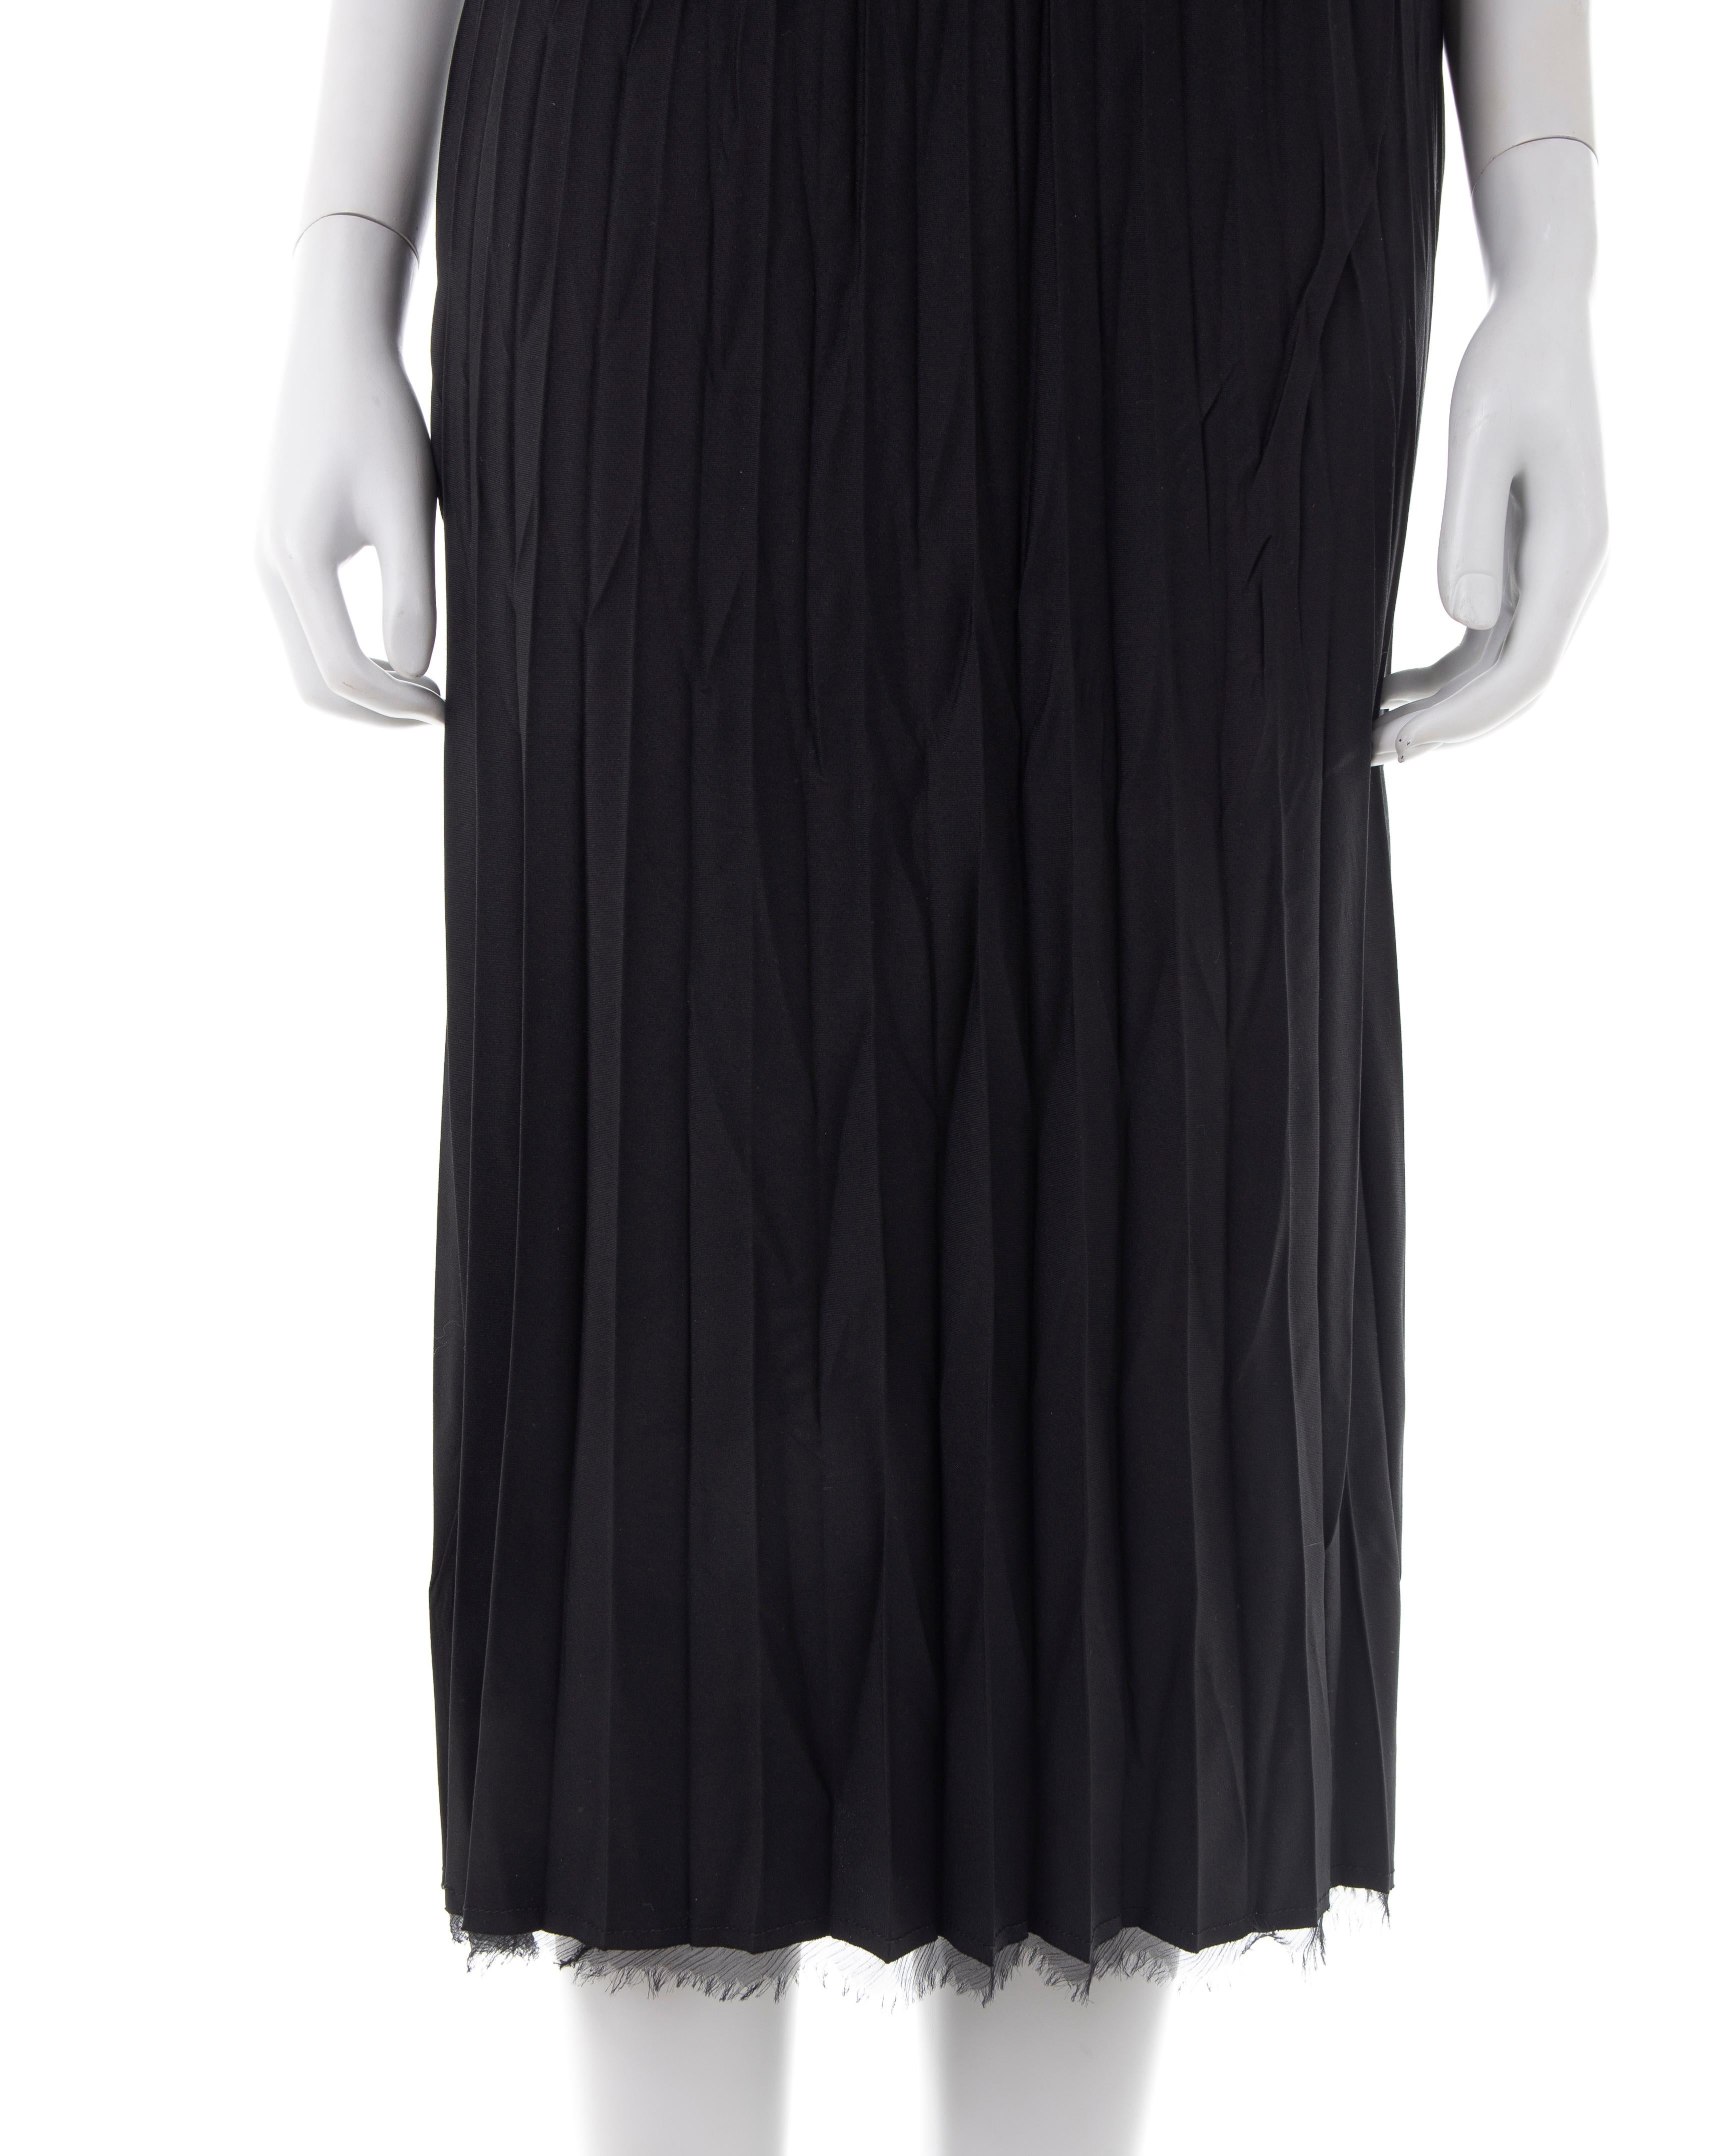 Ermanno Scervino black silk crinkled dress with crystal straps, 2000s ca. For Sale 2